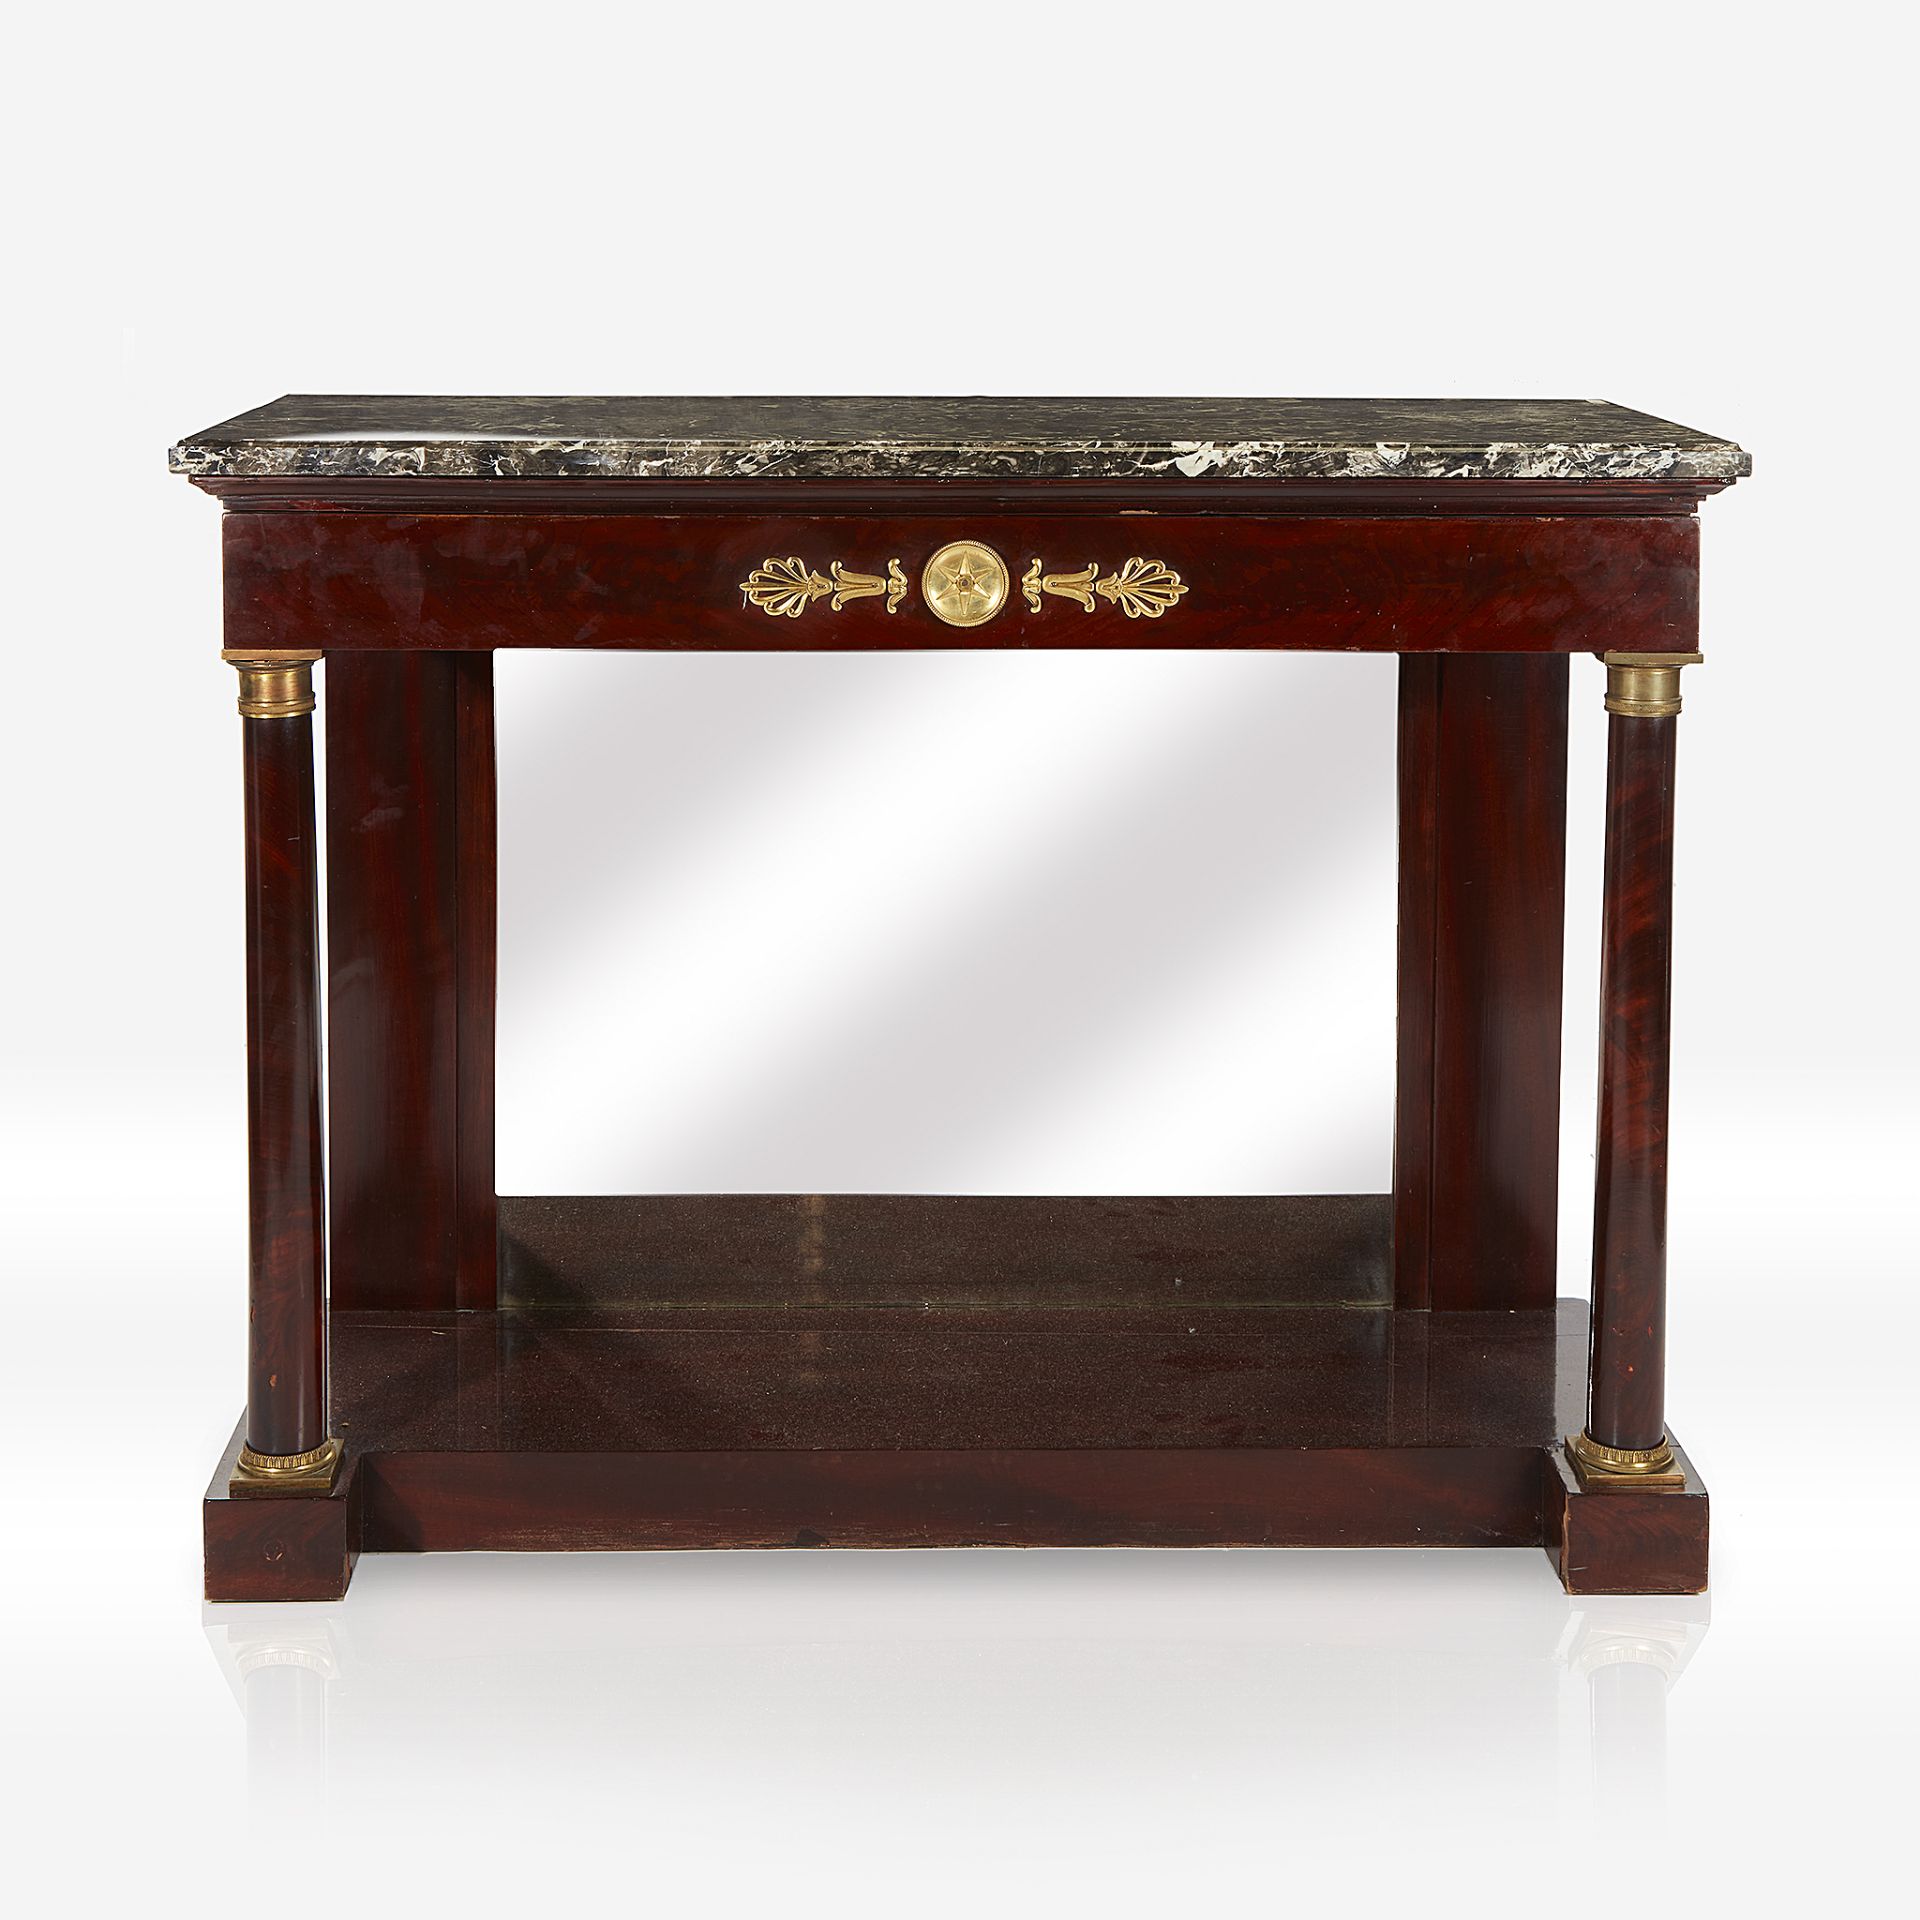 An Empire ormolu-mounted mahogany marble-topped console, Circa 1815